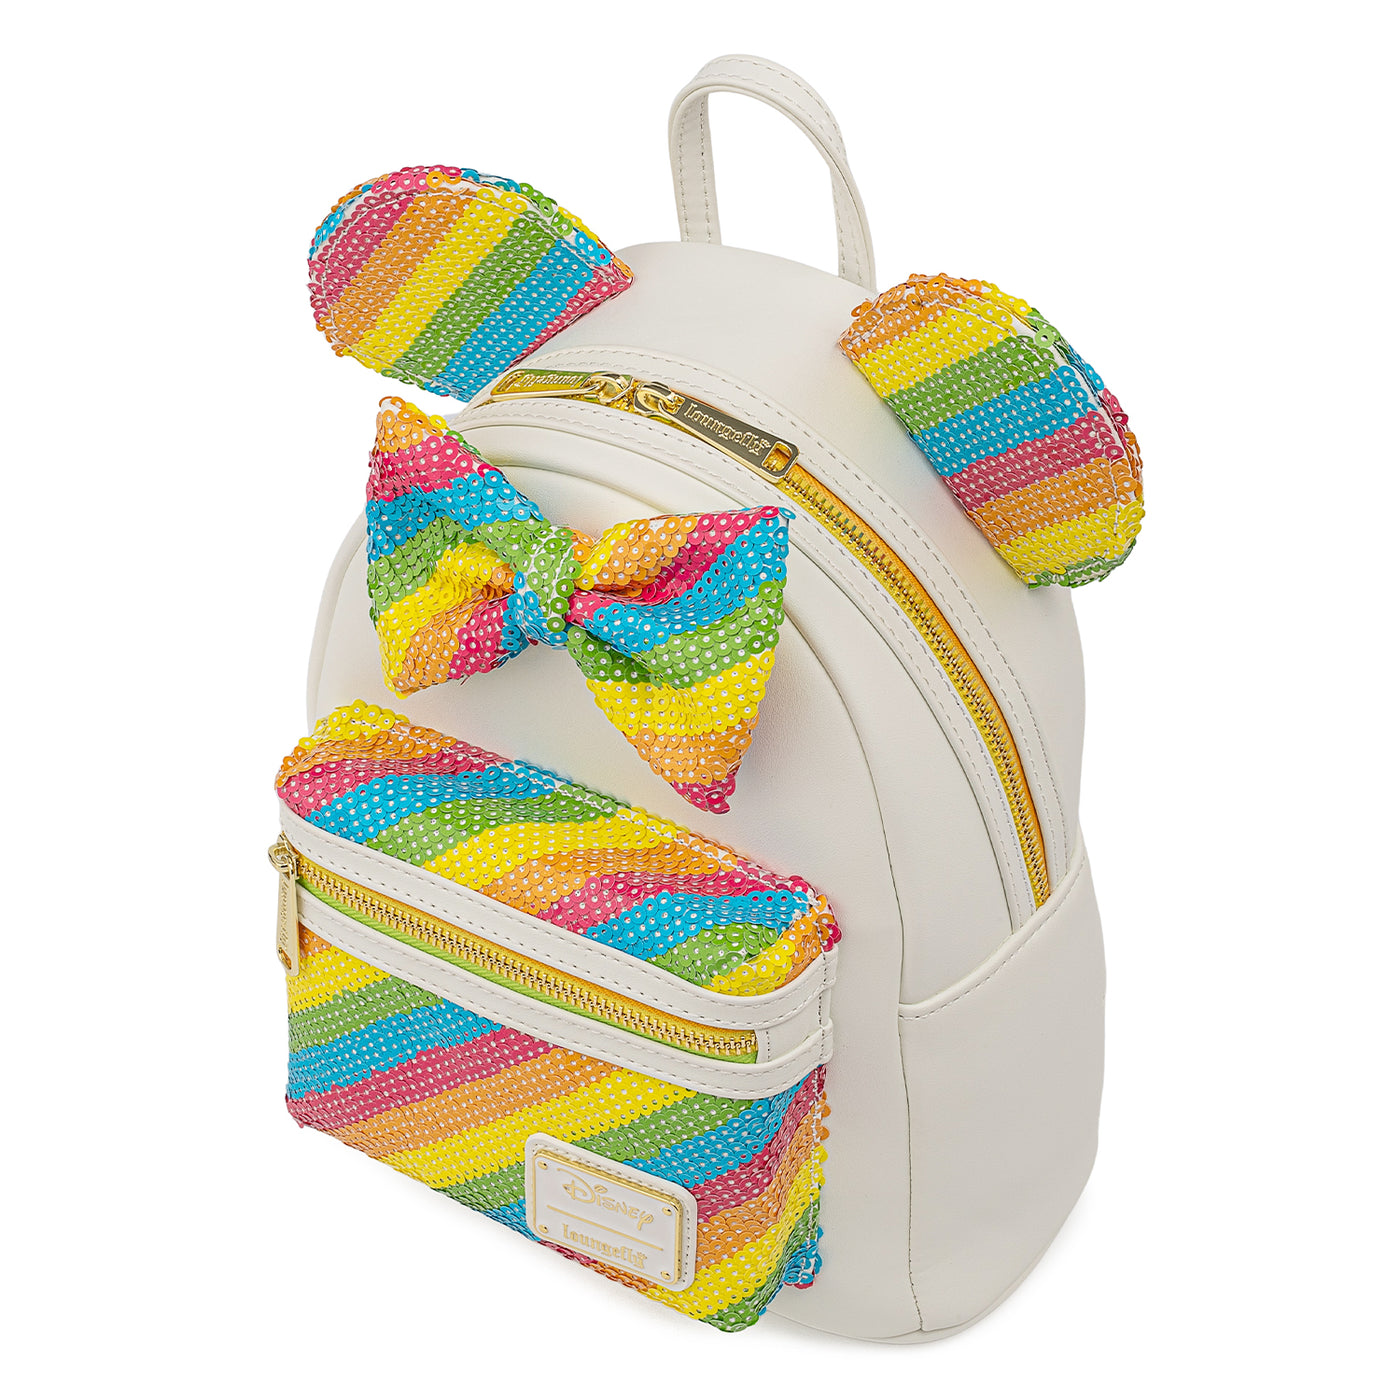 Loungefly Disney Sequin Rainbow Minnie Mouse Mini Backpack